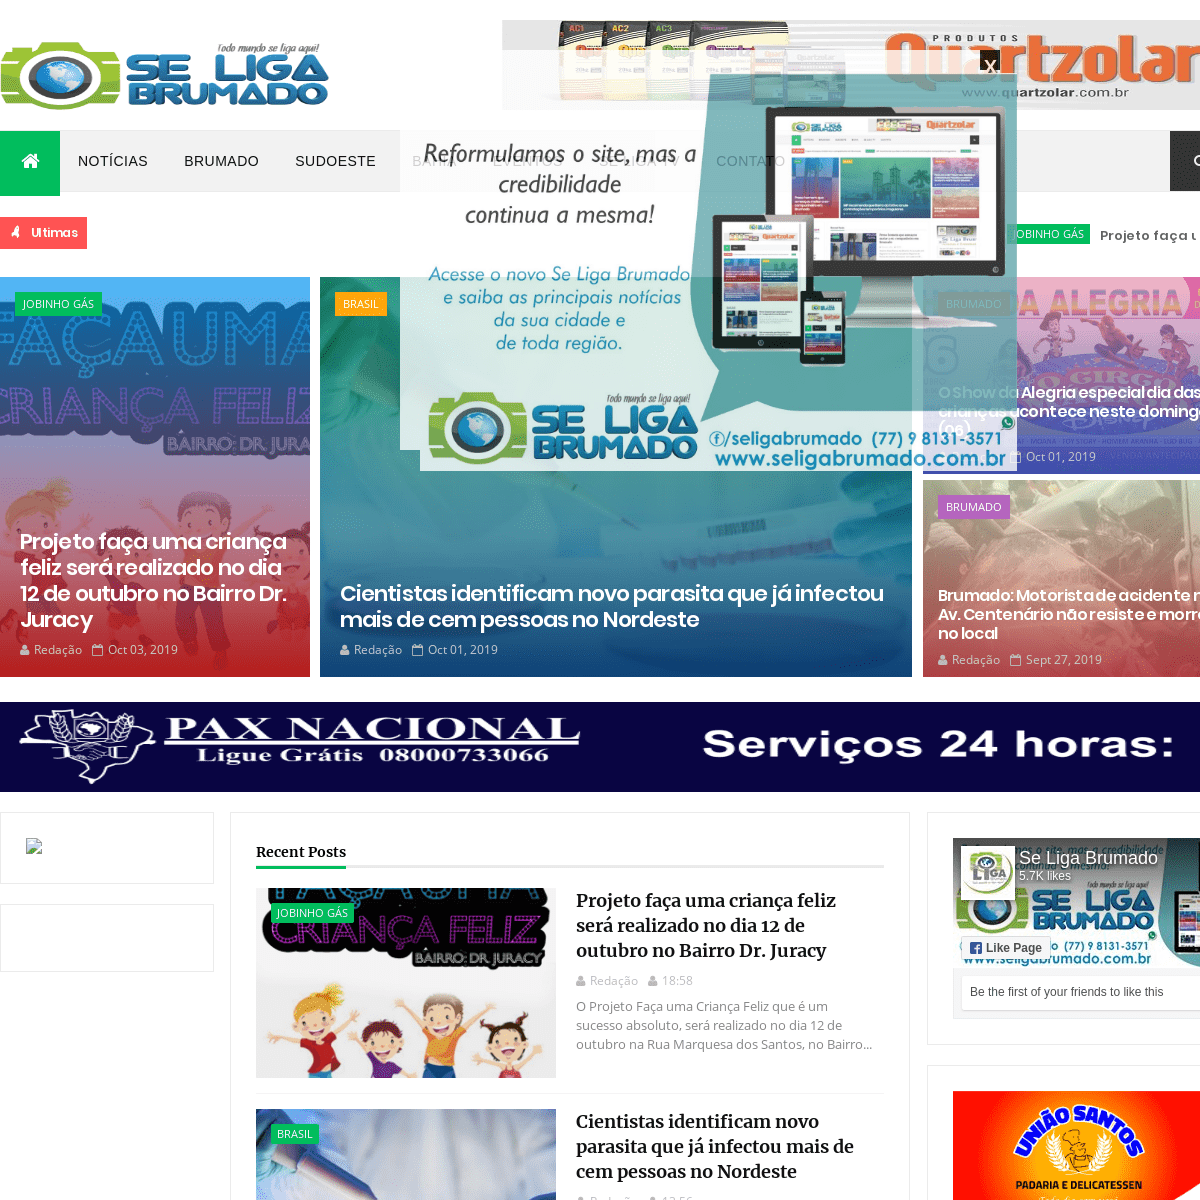 A complete backup of seligabrumado.com.br